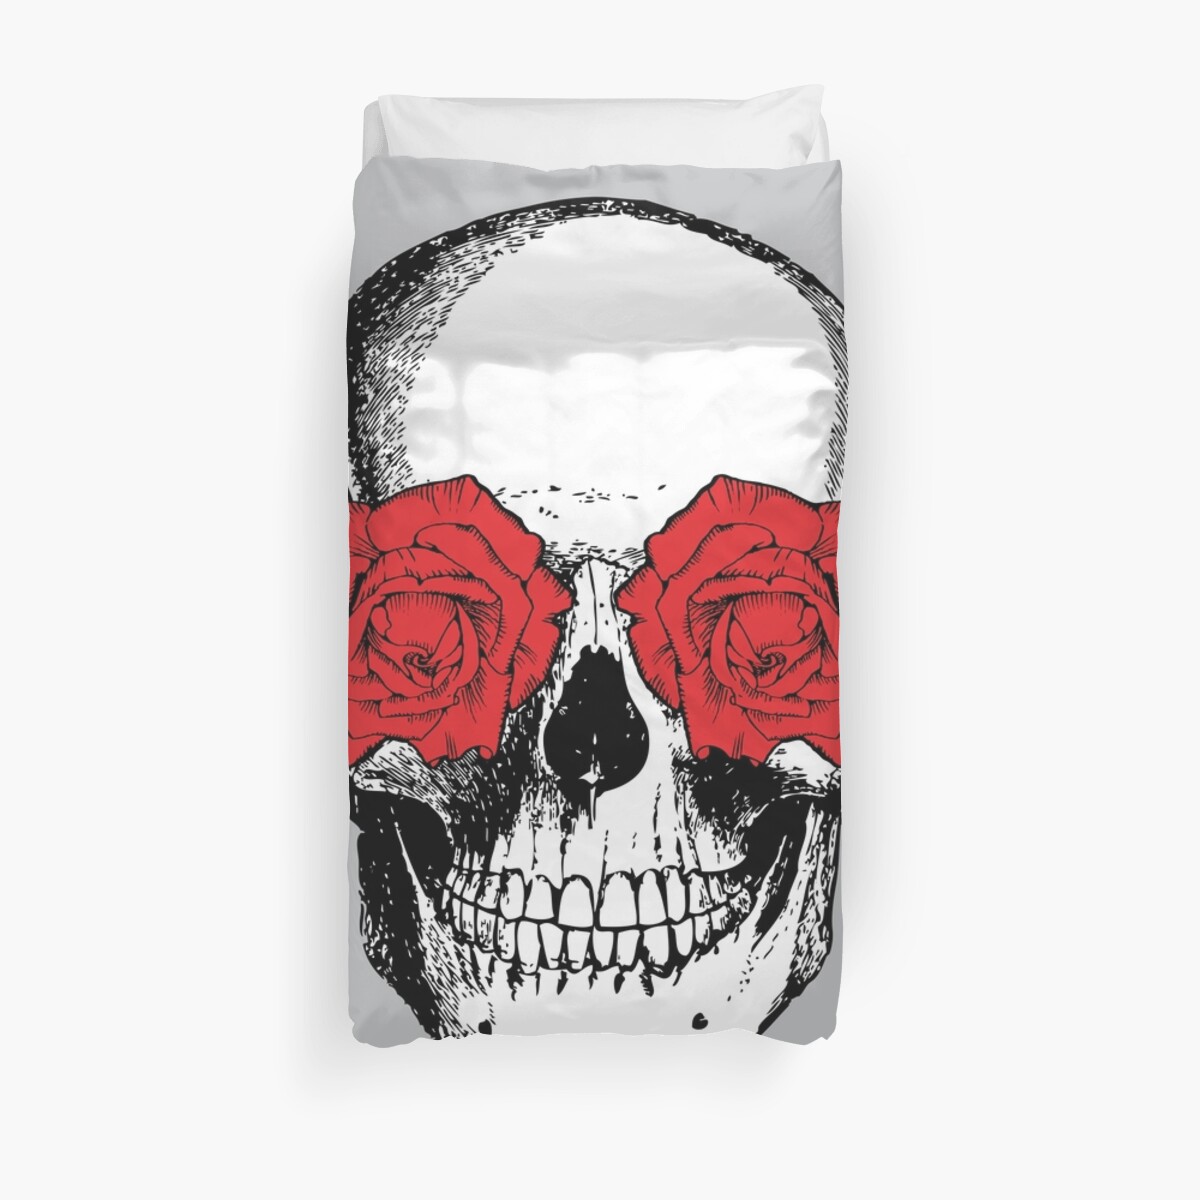 Skull And Roses Skull And Flowers Skulls And Skeletons